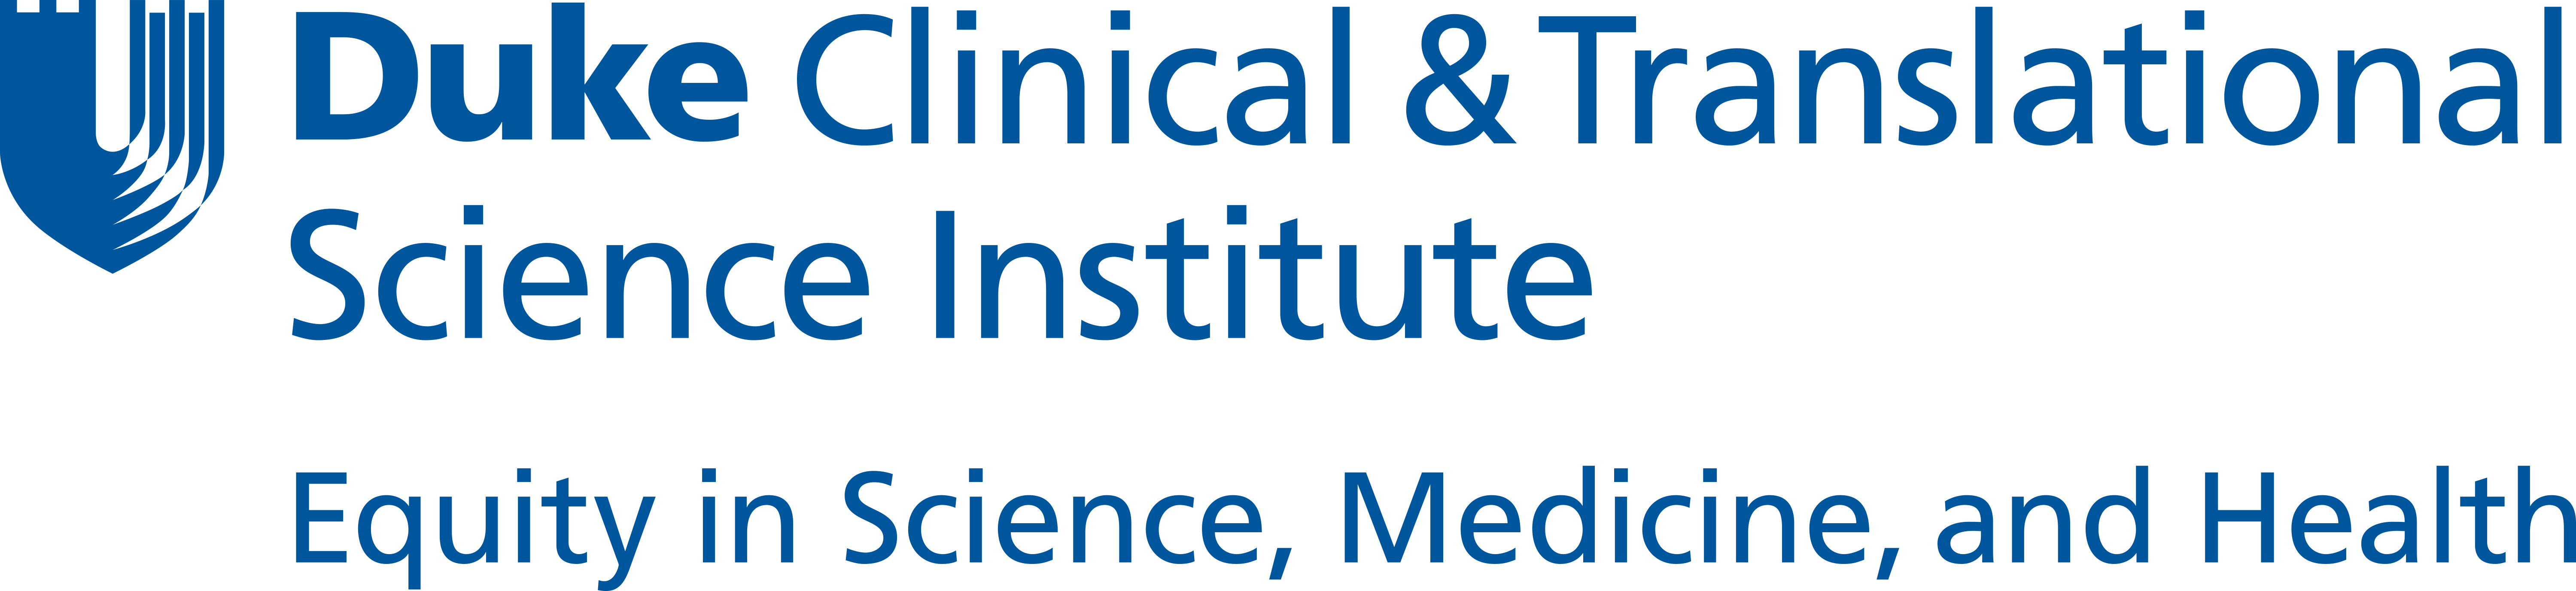 CTSI logo and tagline